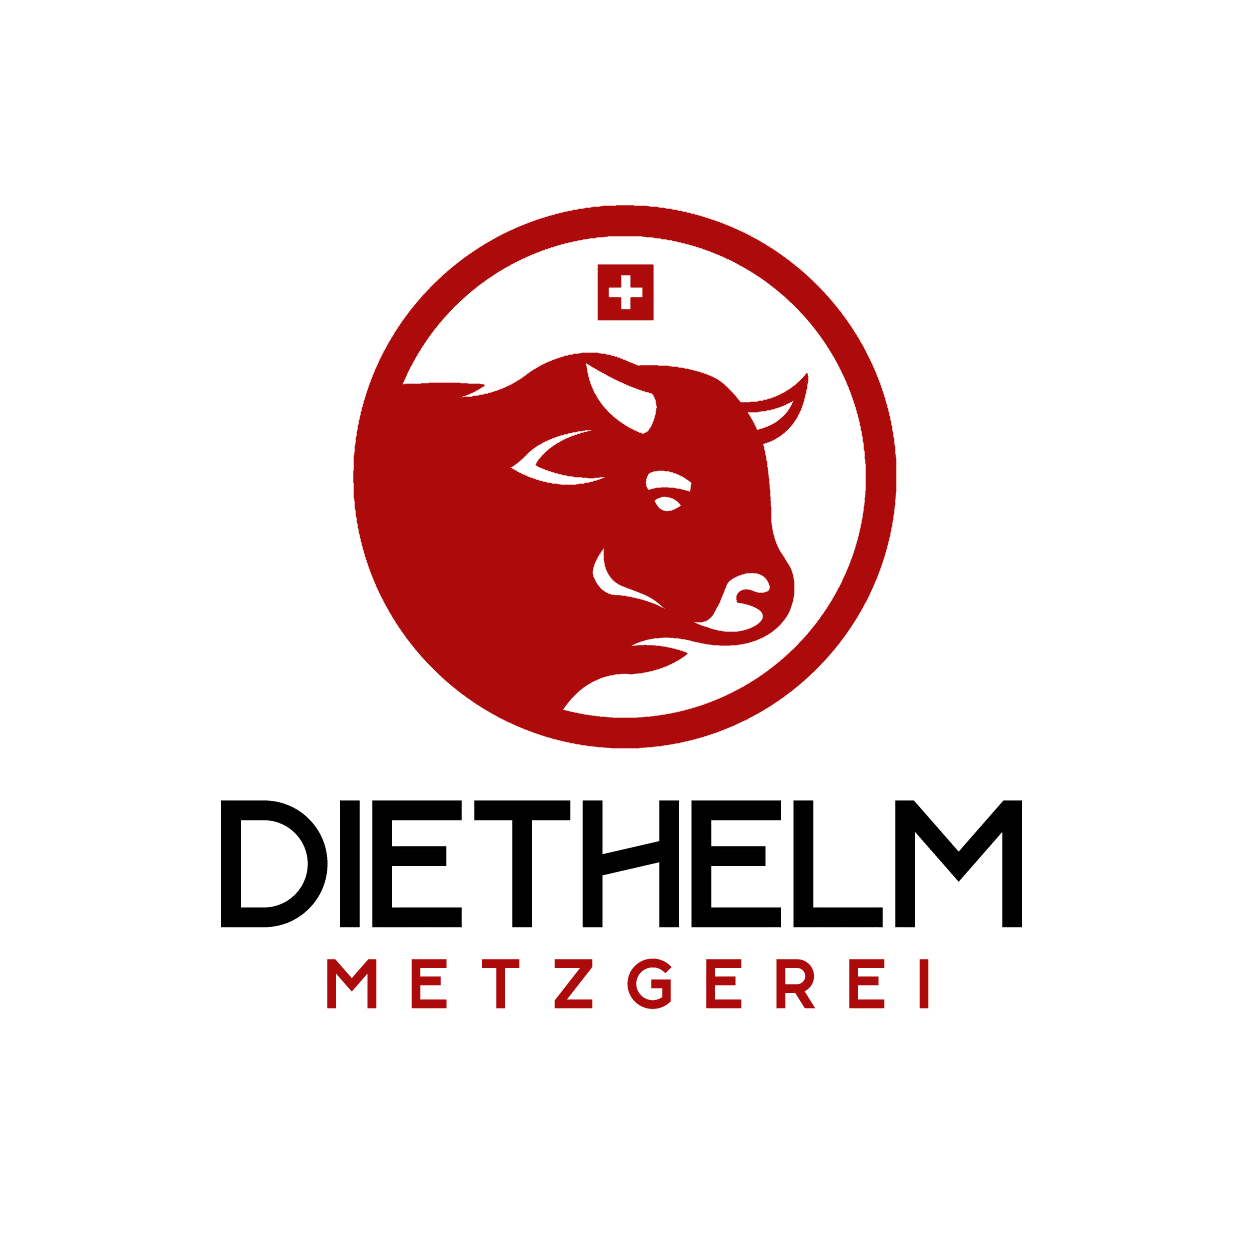 Metzgerei Diethelm